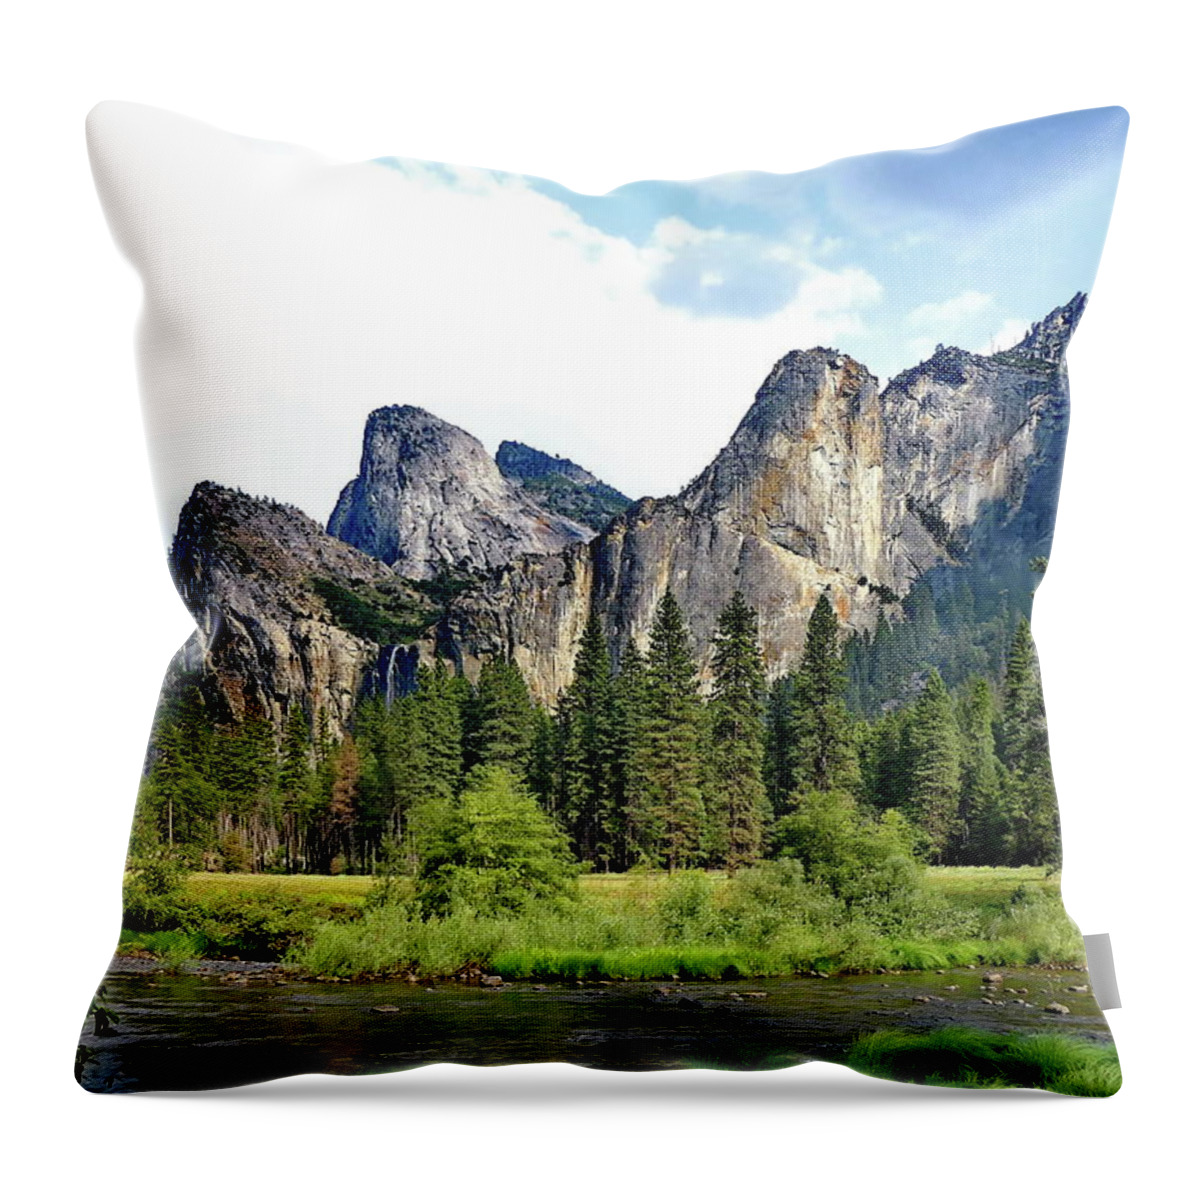 Yosemite National Park Throw Pillow featuring the photograph Natural Beauty of Yosemite by Lyuba Filatova